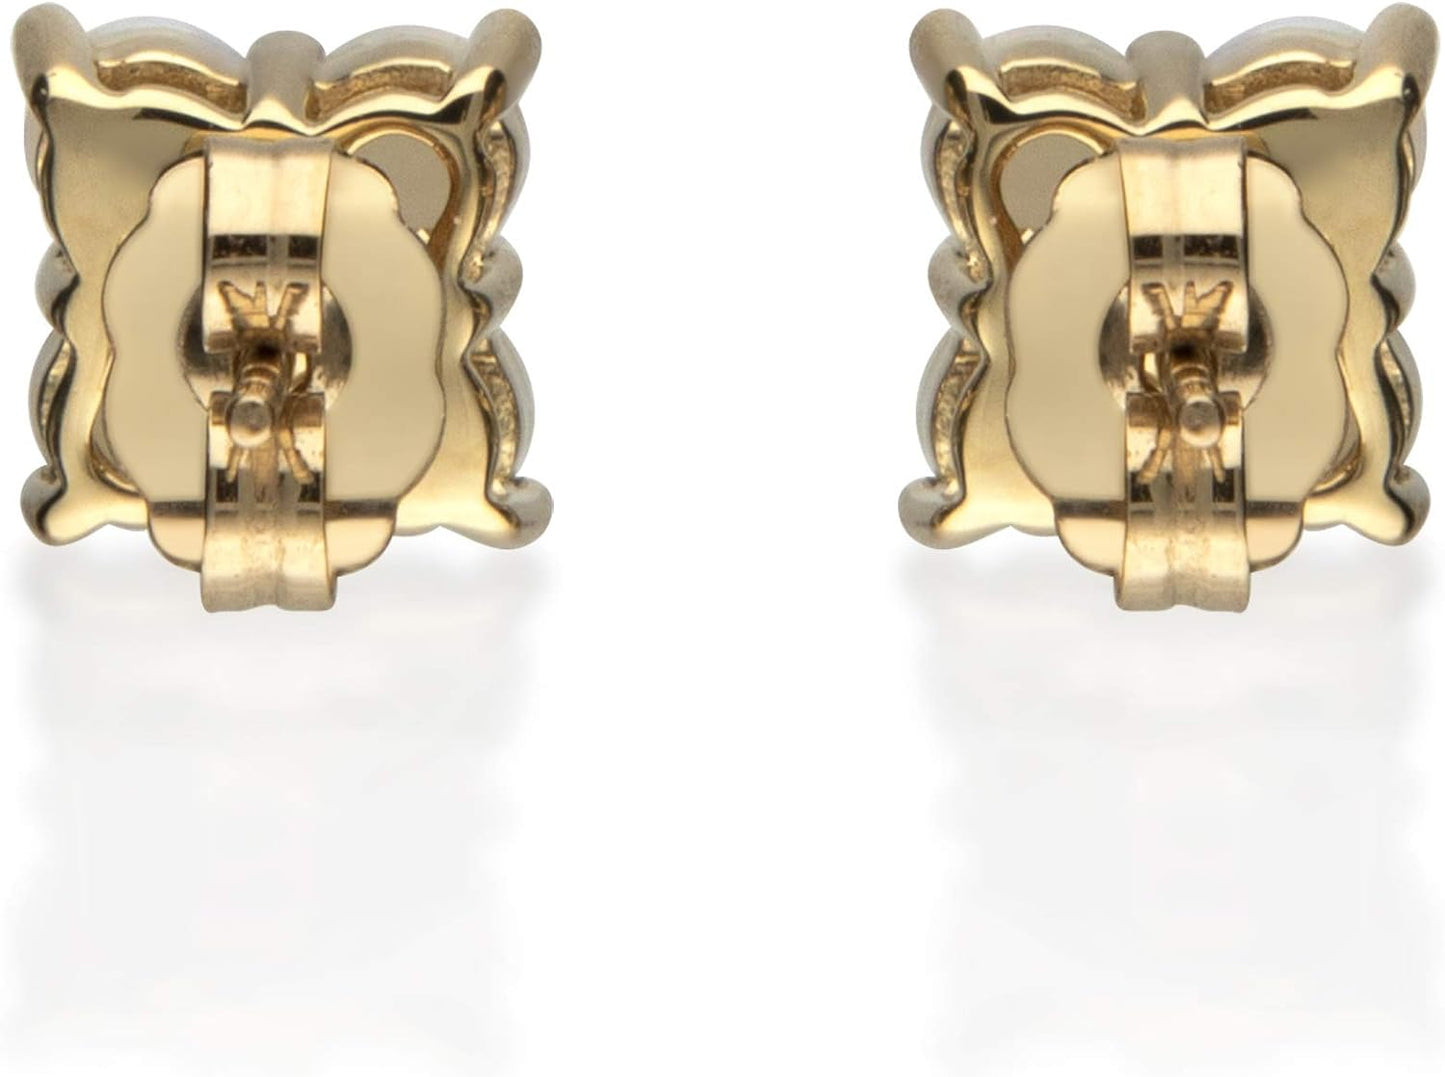 14K Yellow Gold Natural Australian Opal Earrings with Diamonds (Round-Cut) Shaped (GJ3476E-OA)